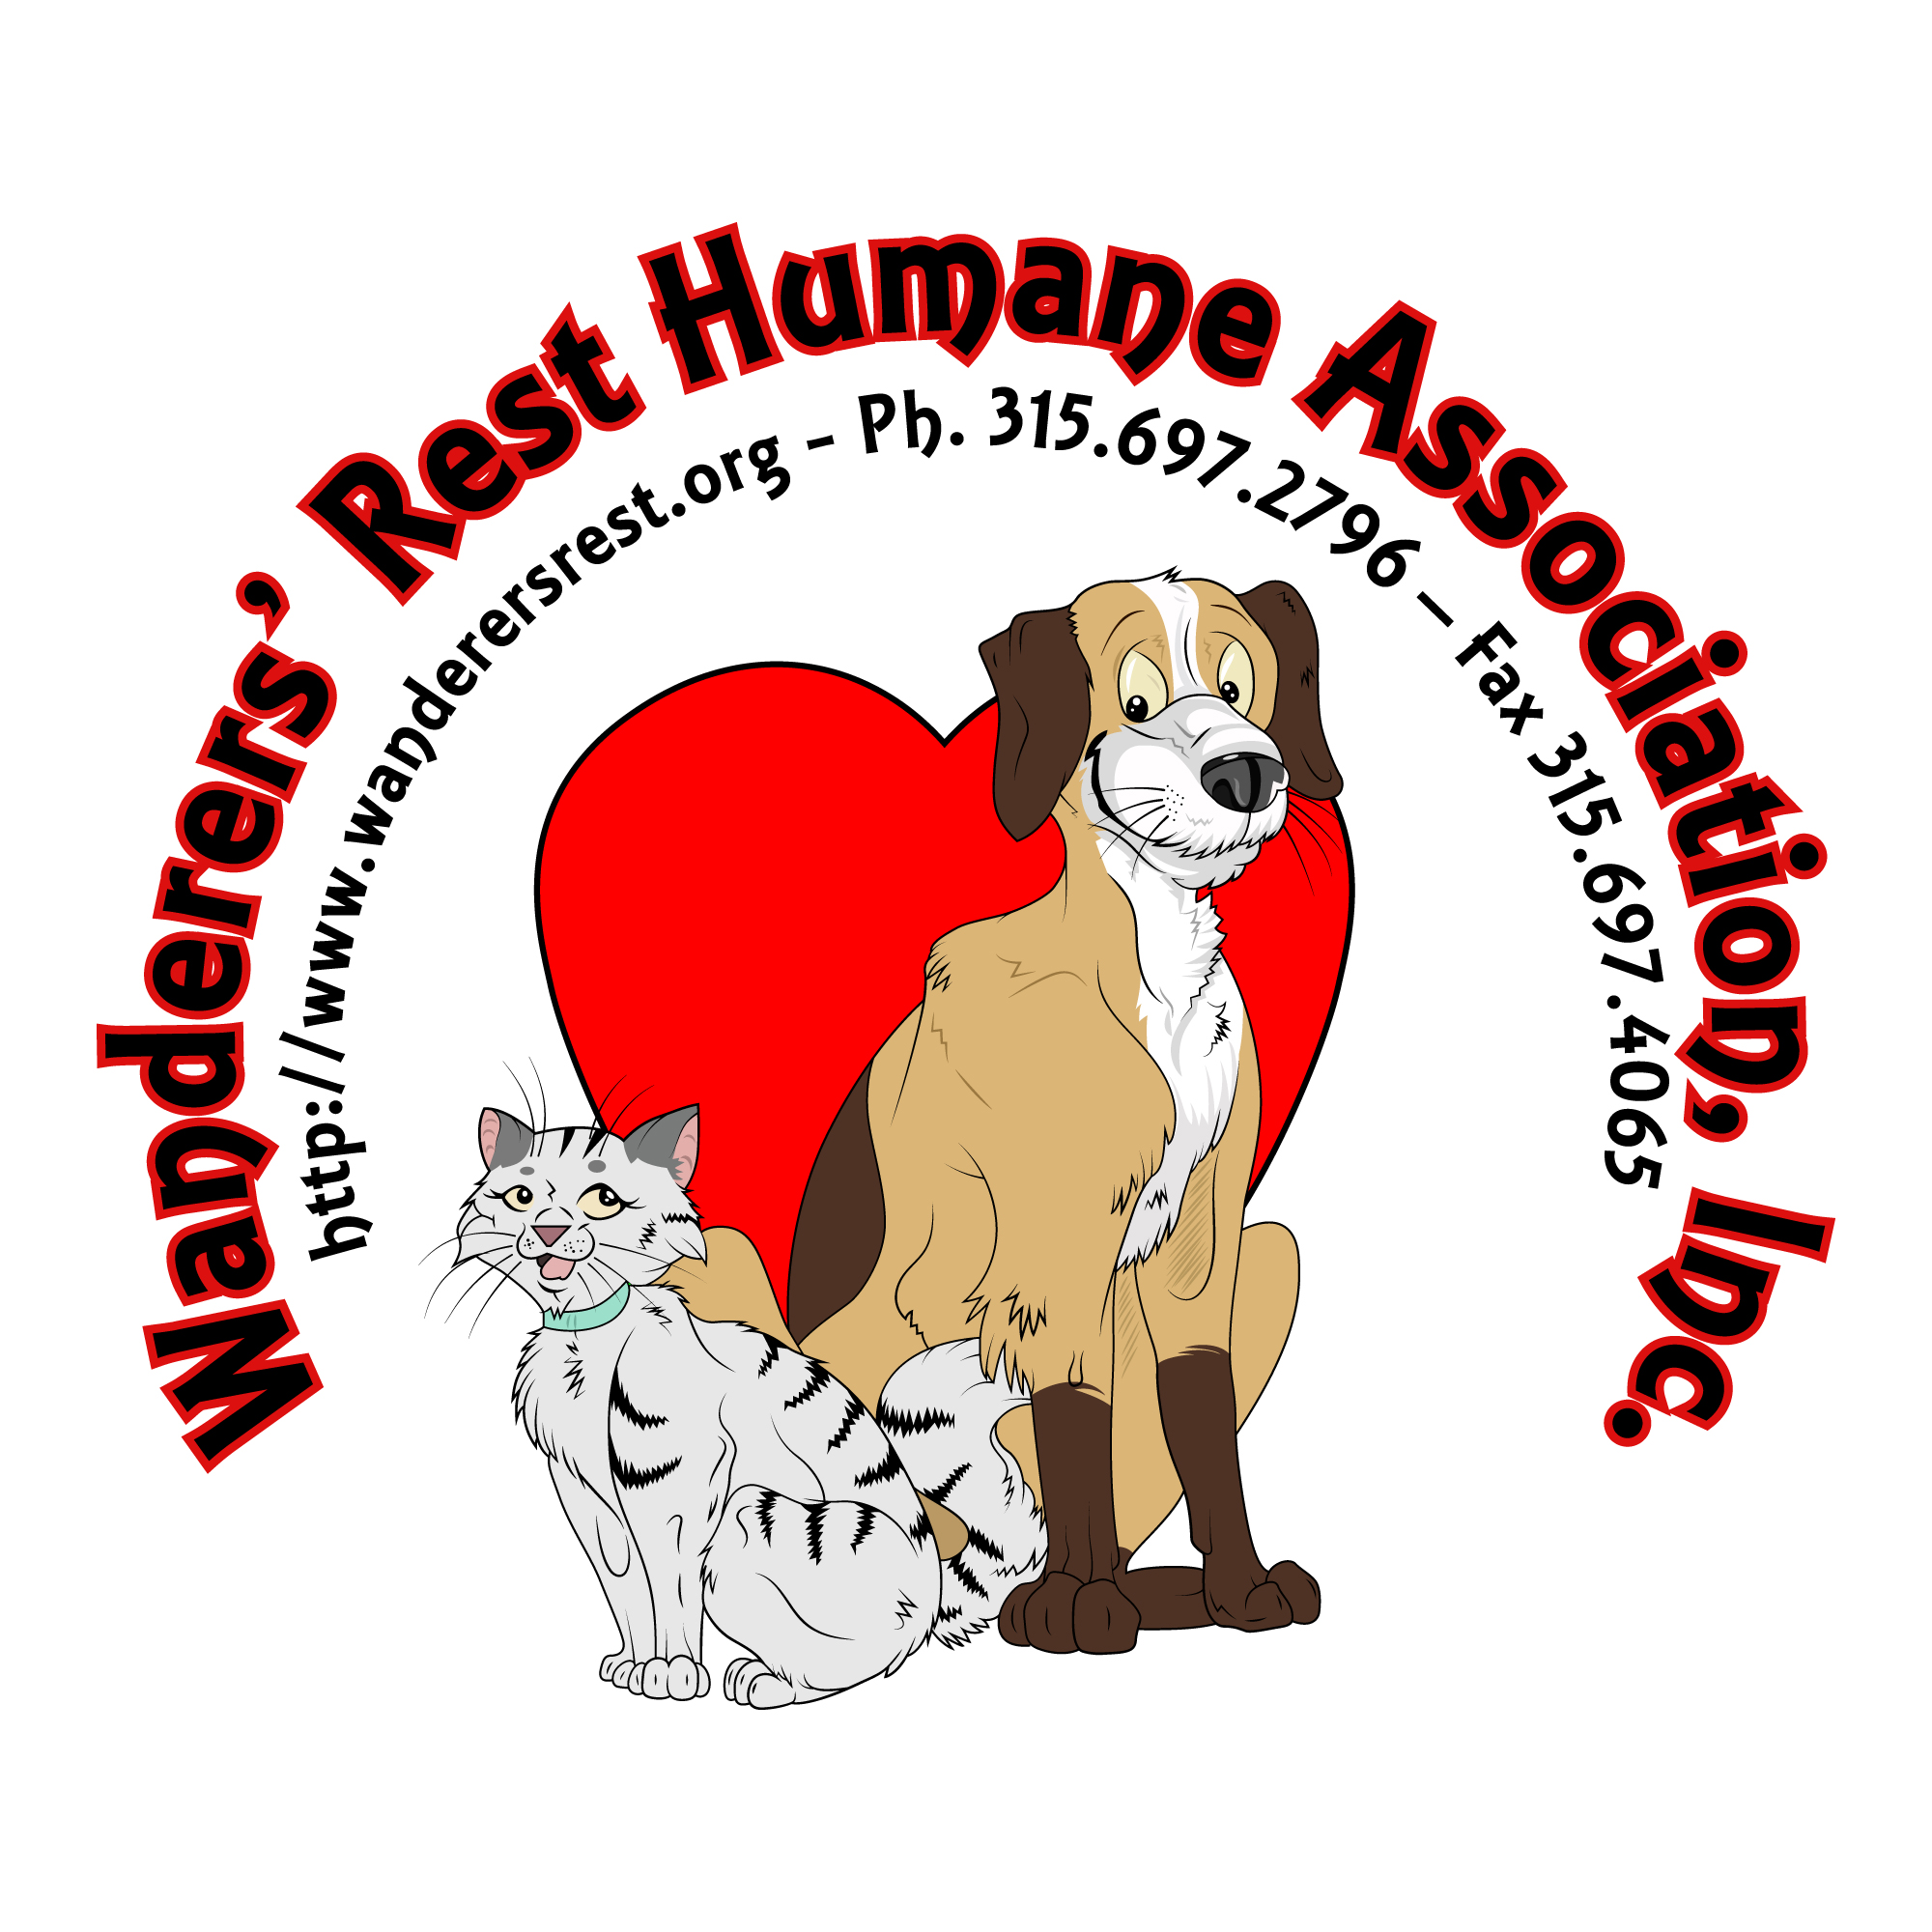 Wanderers' Rest Humane Association, Inc